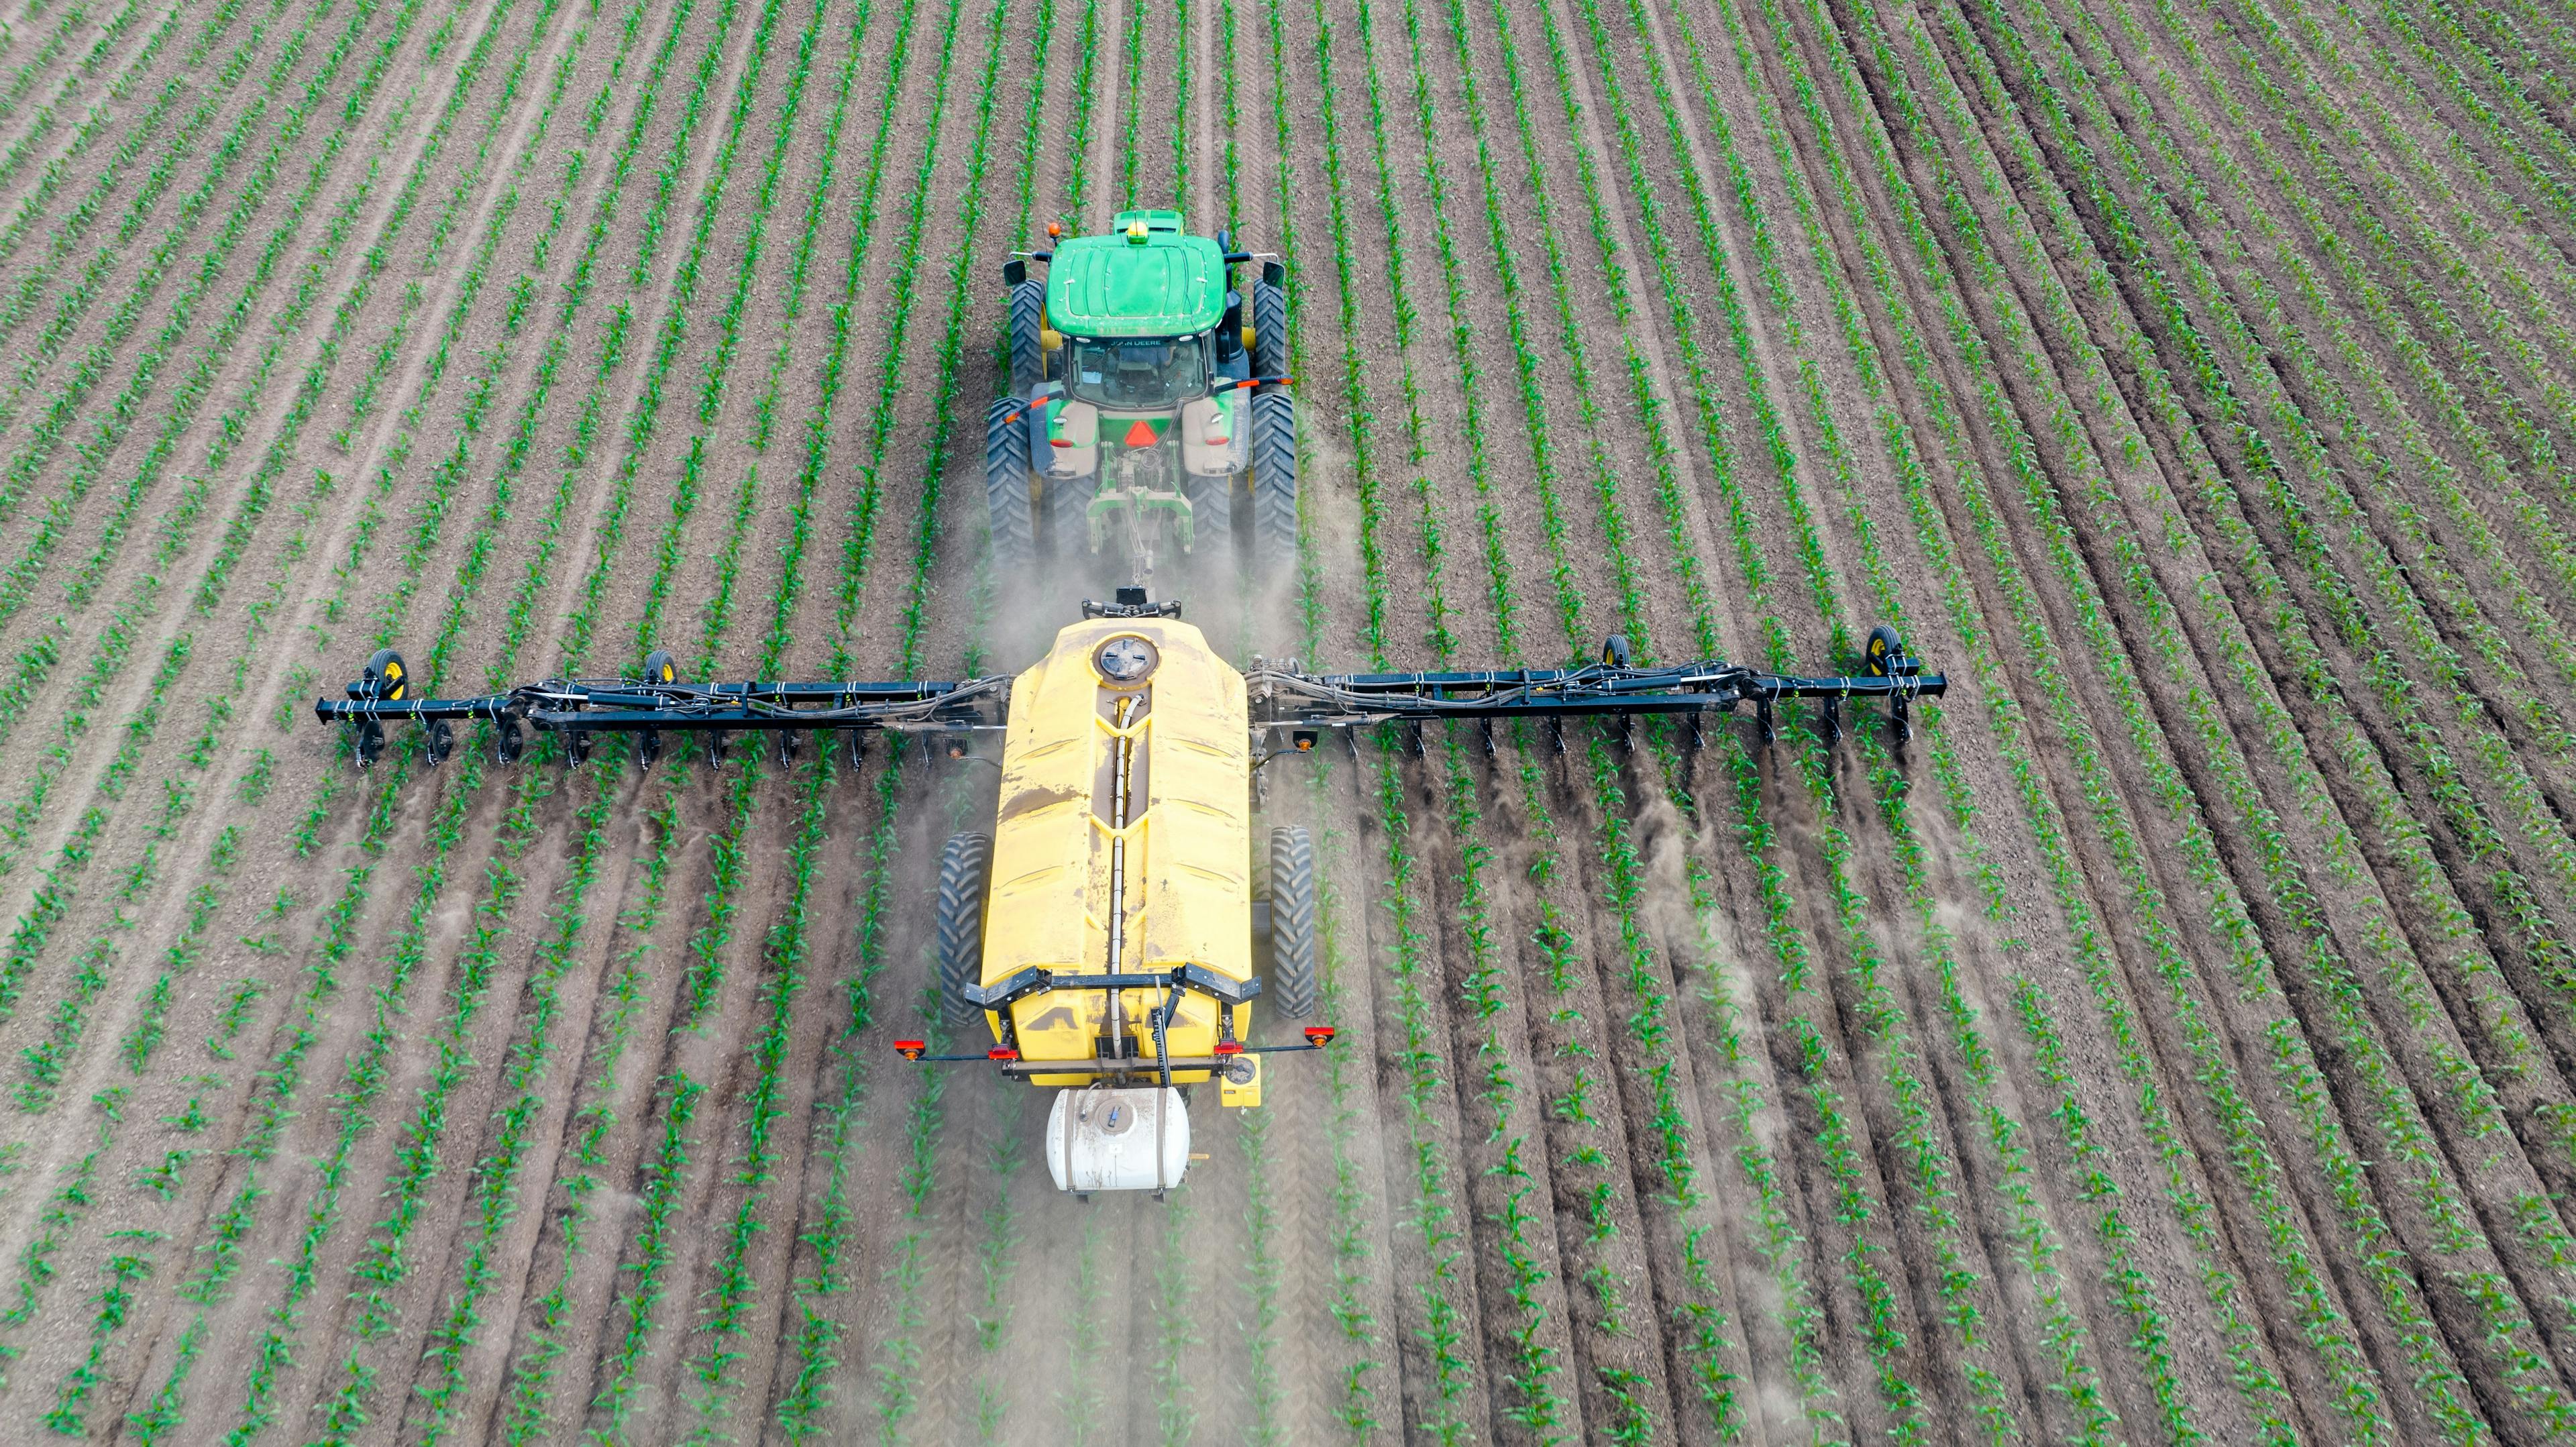 Optimize nutrient management for reduced on-farm emissions